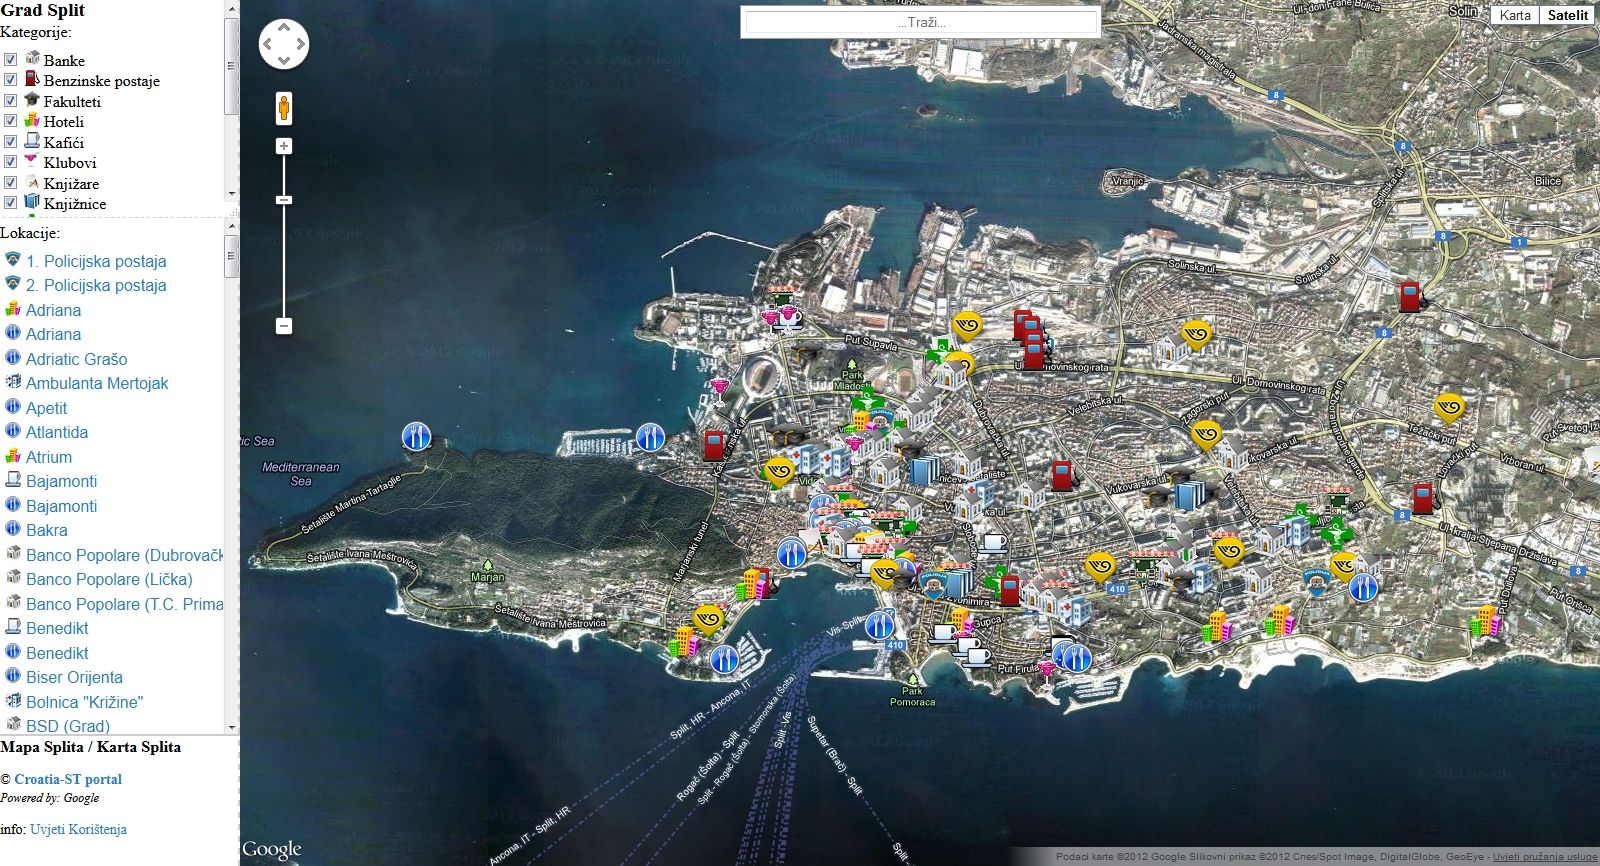 karta splita google maps Mapa Splita   Karta Splita | Croatia ST portal karta splita google maps